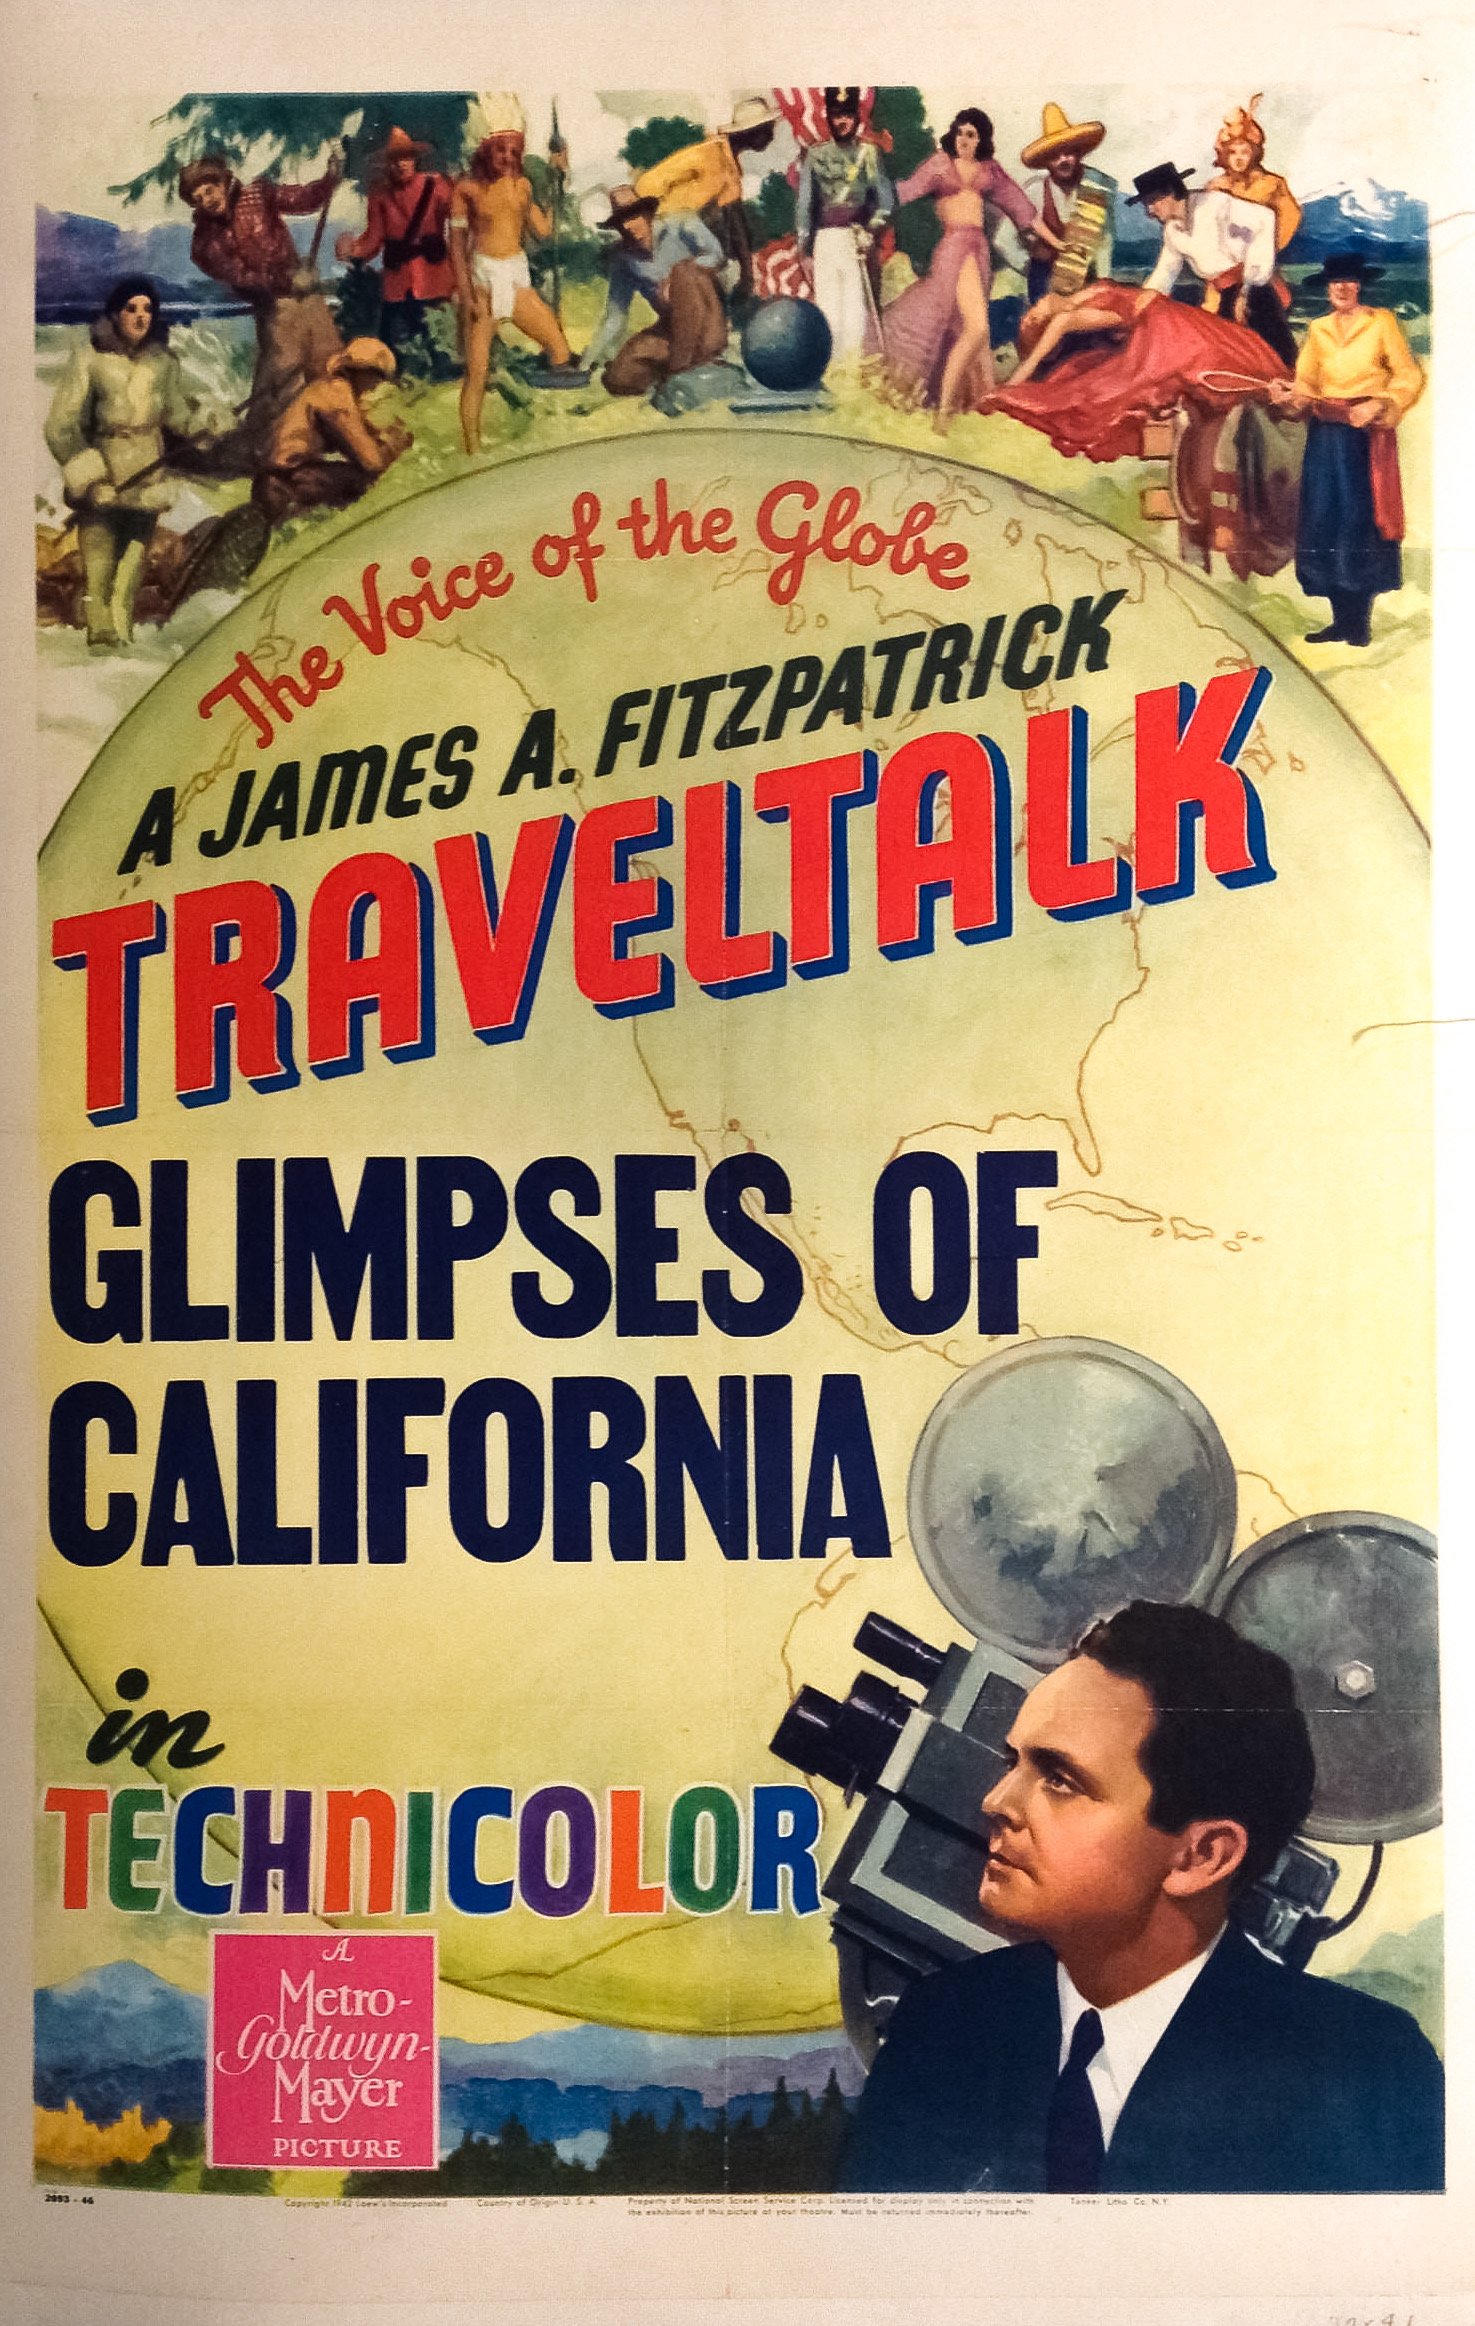 Glimpses of California (1946) Screenshot 1 